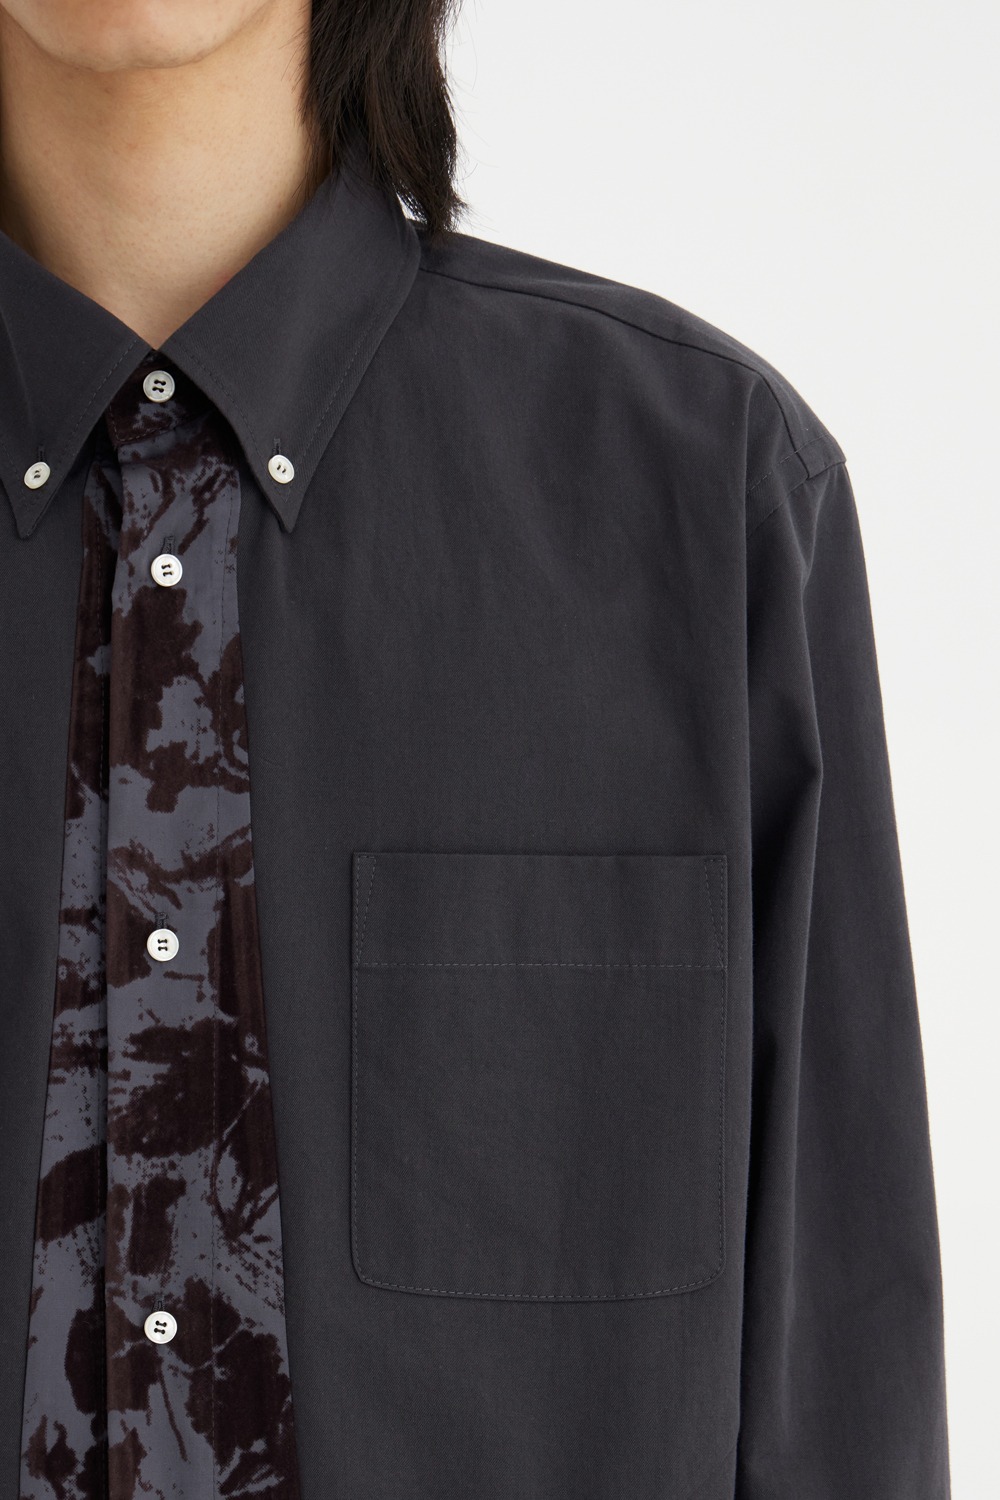 132 Shirt-1. Dark Gray 2. Navy / Burgundy